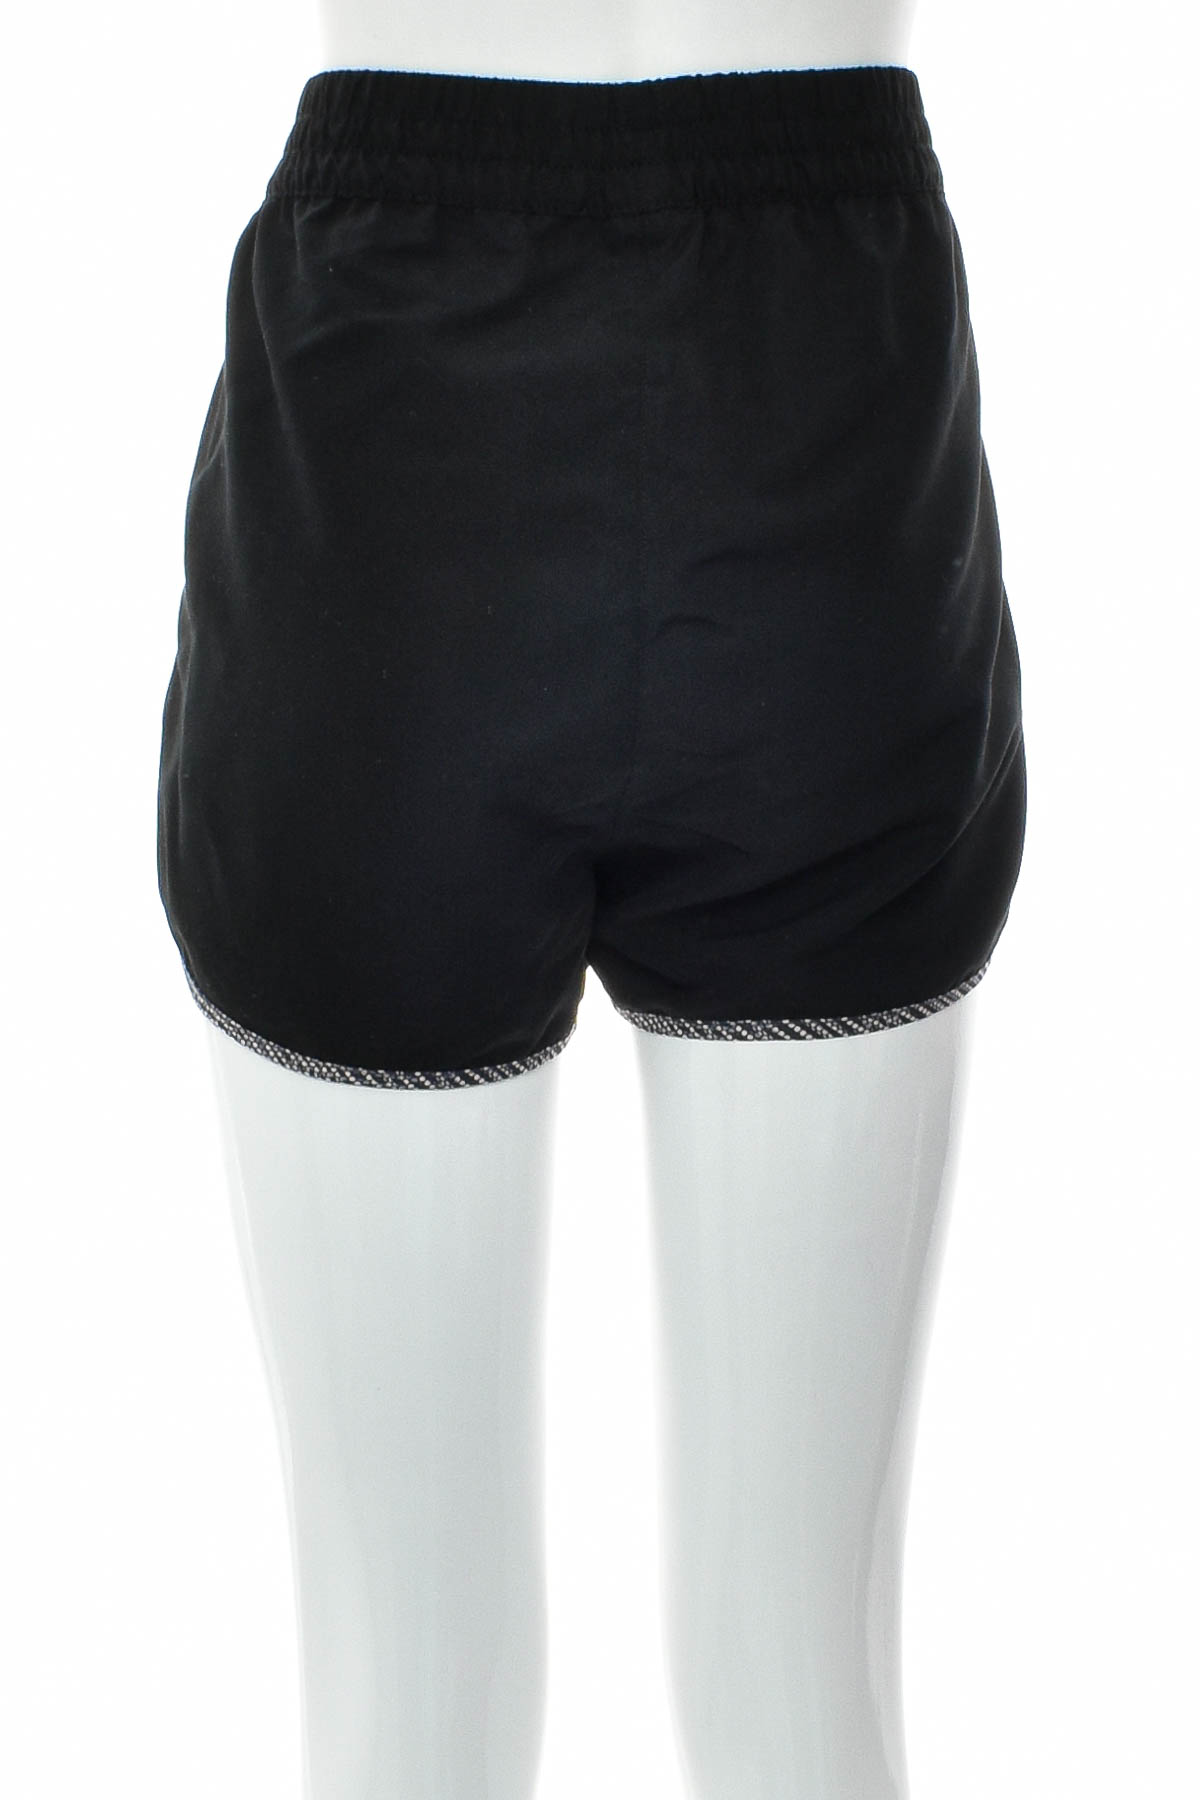 Women's shorts - Sophia THIEL - 1